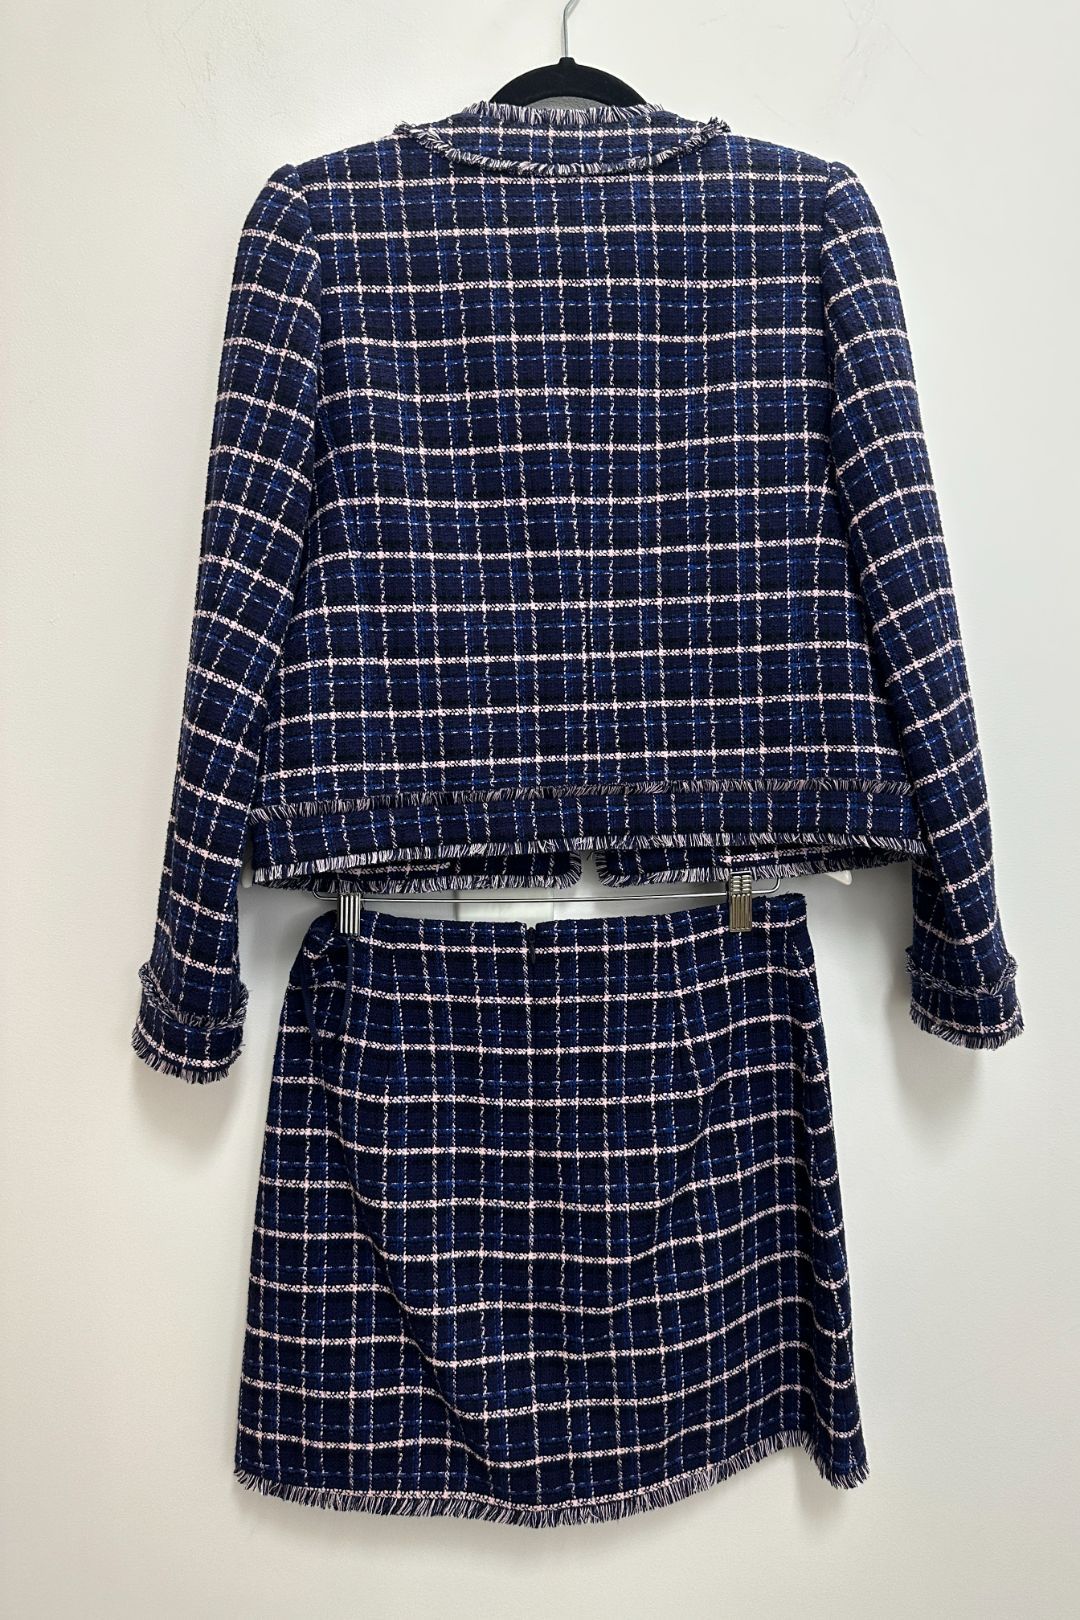 Rebecca Vallance Fallon Check Tweed Jacket and Skirt Set